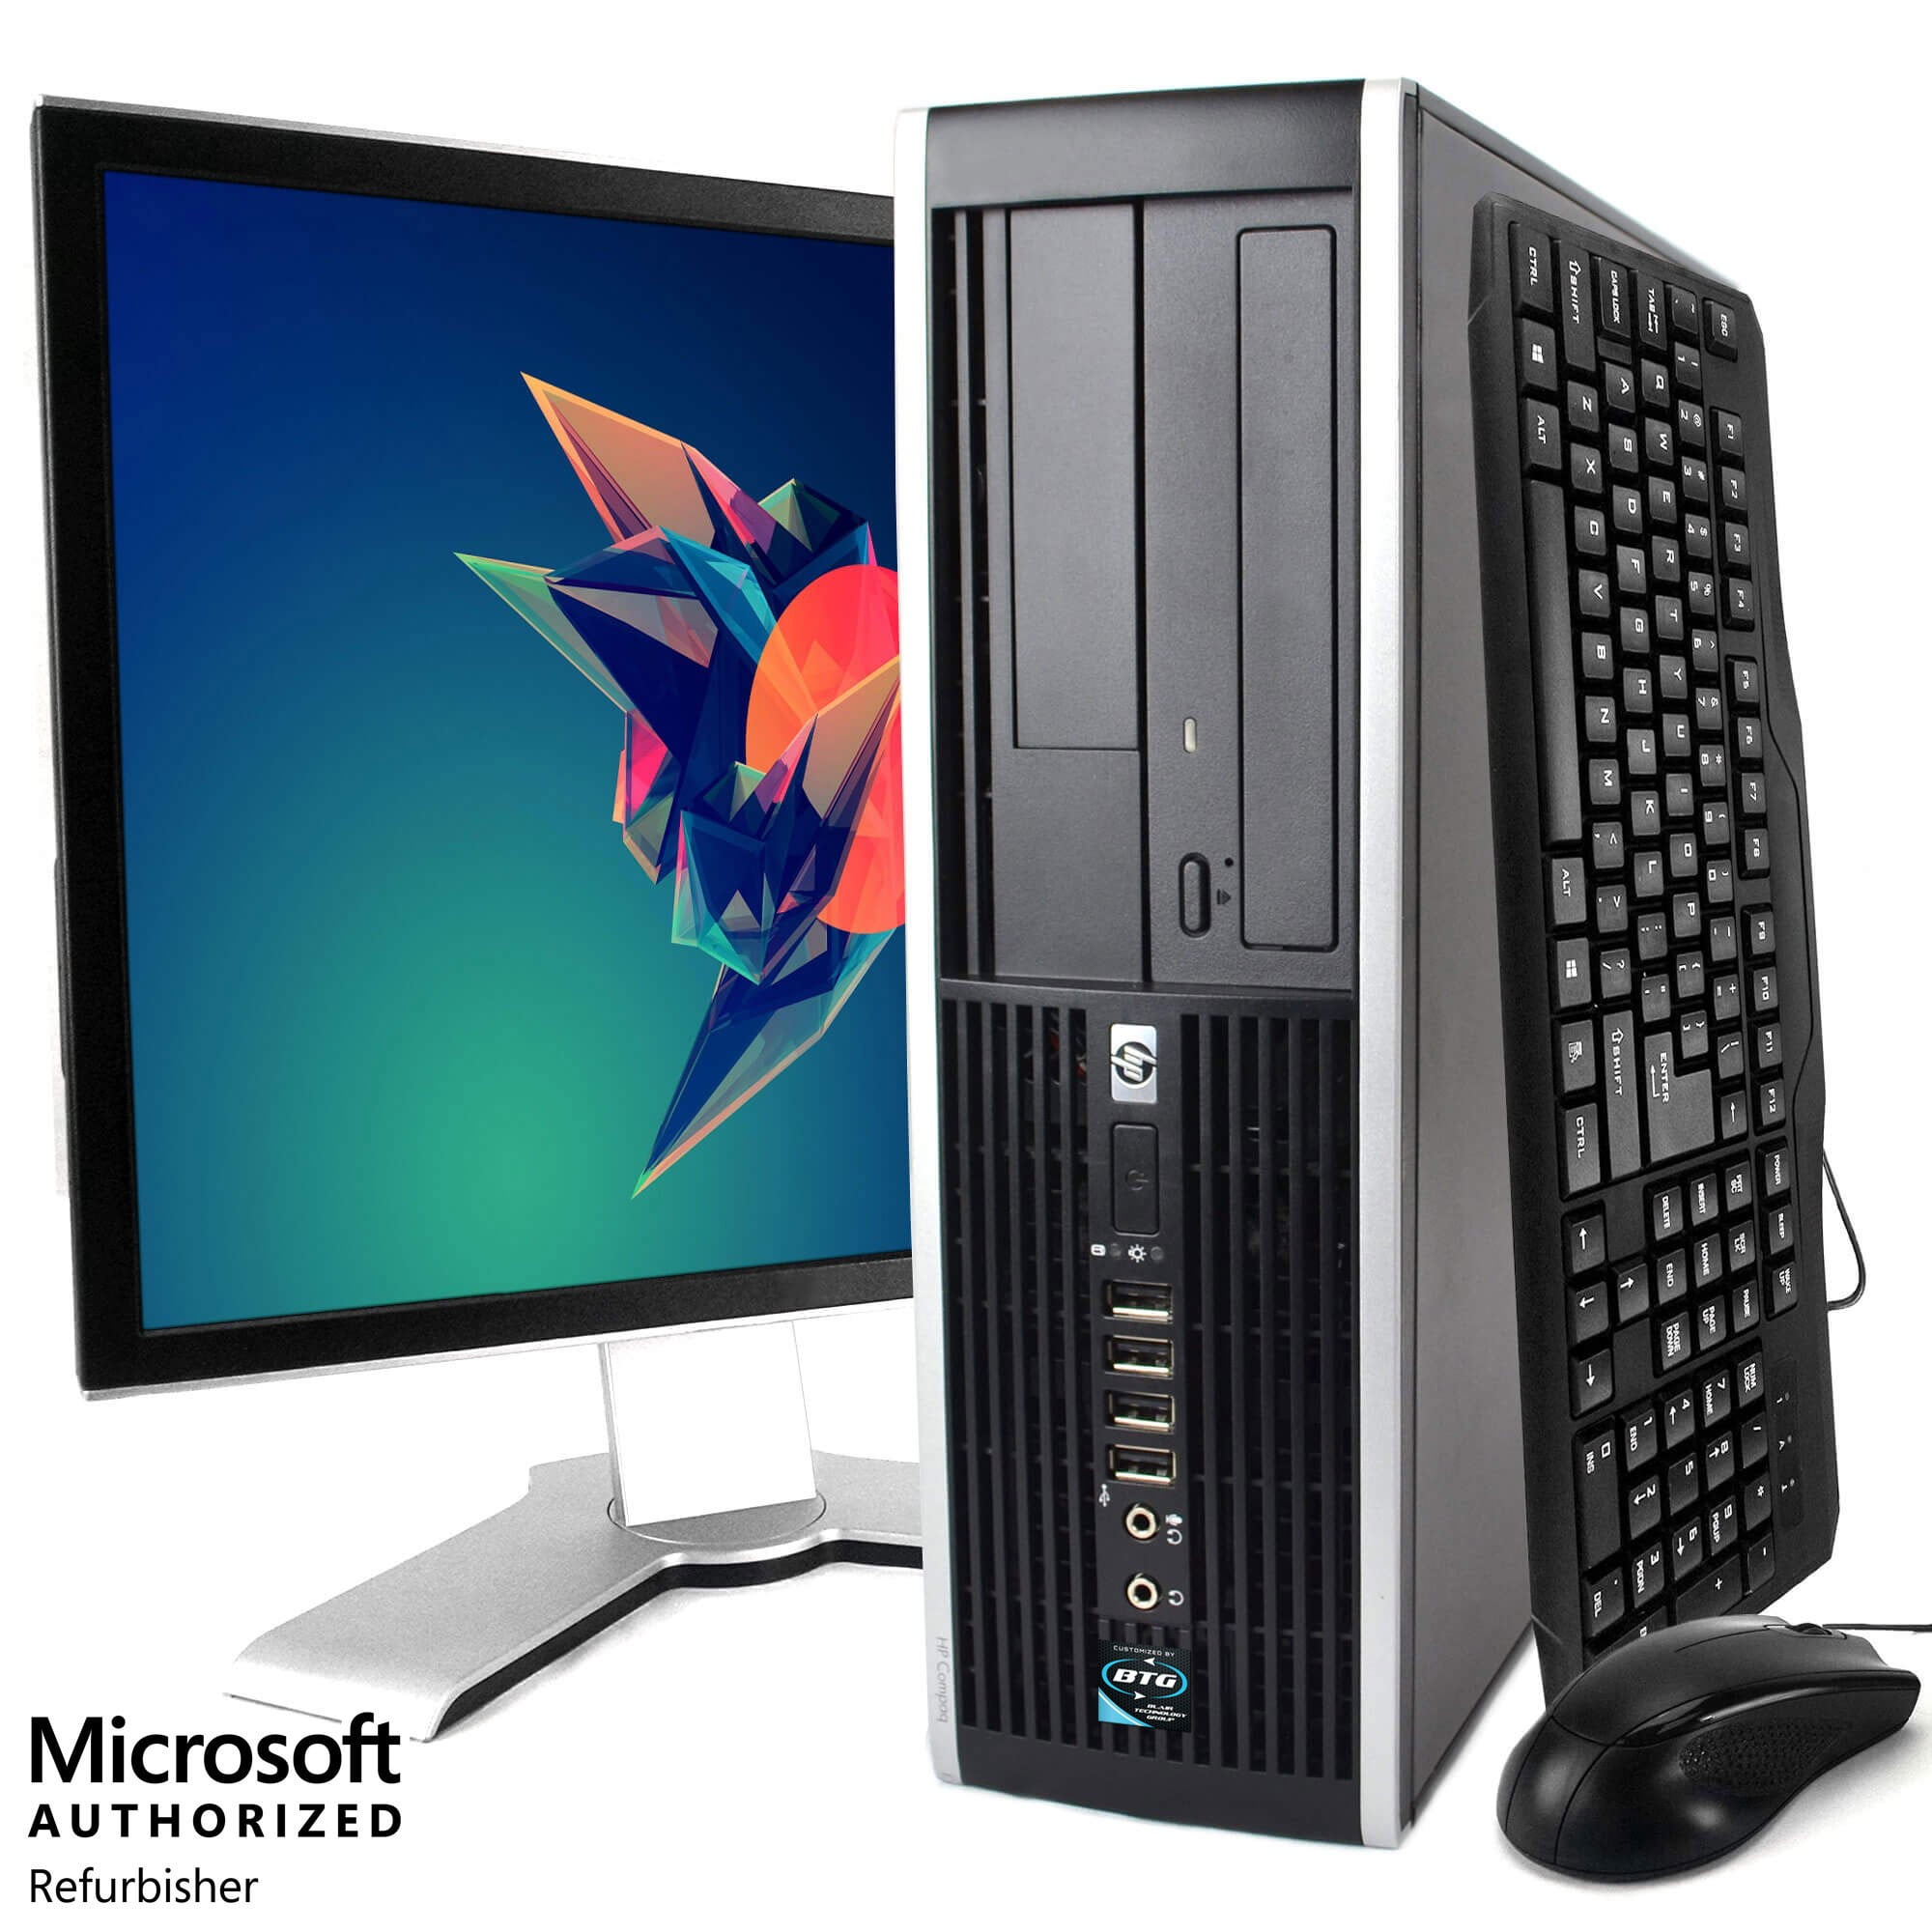 Overskyet knap otte HP Desktop Computer Intel I5 8GB RAM 500GB Windows 10 20in Monitor Kit -  Walmart.com